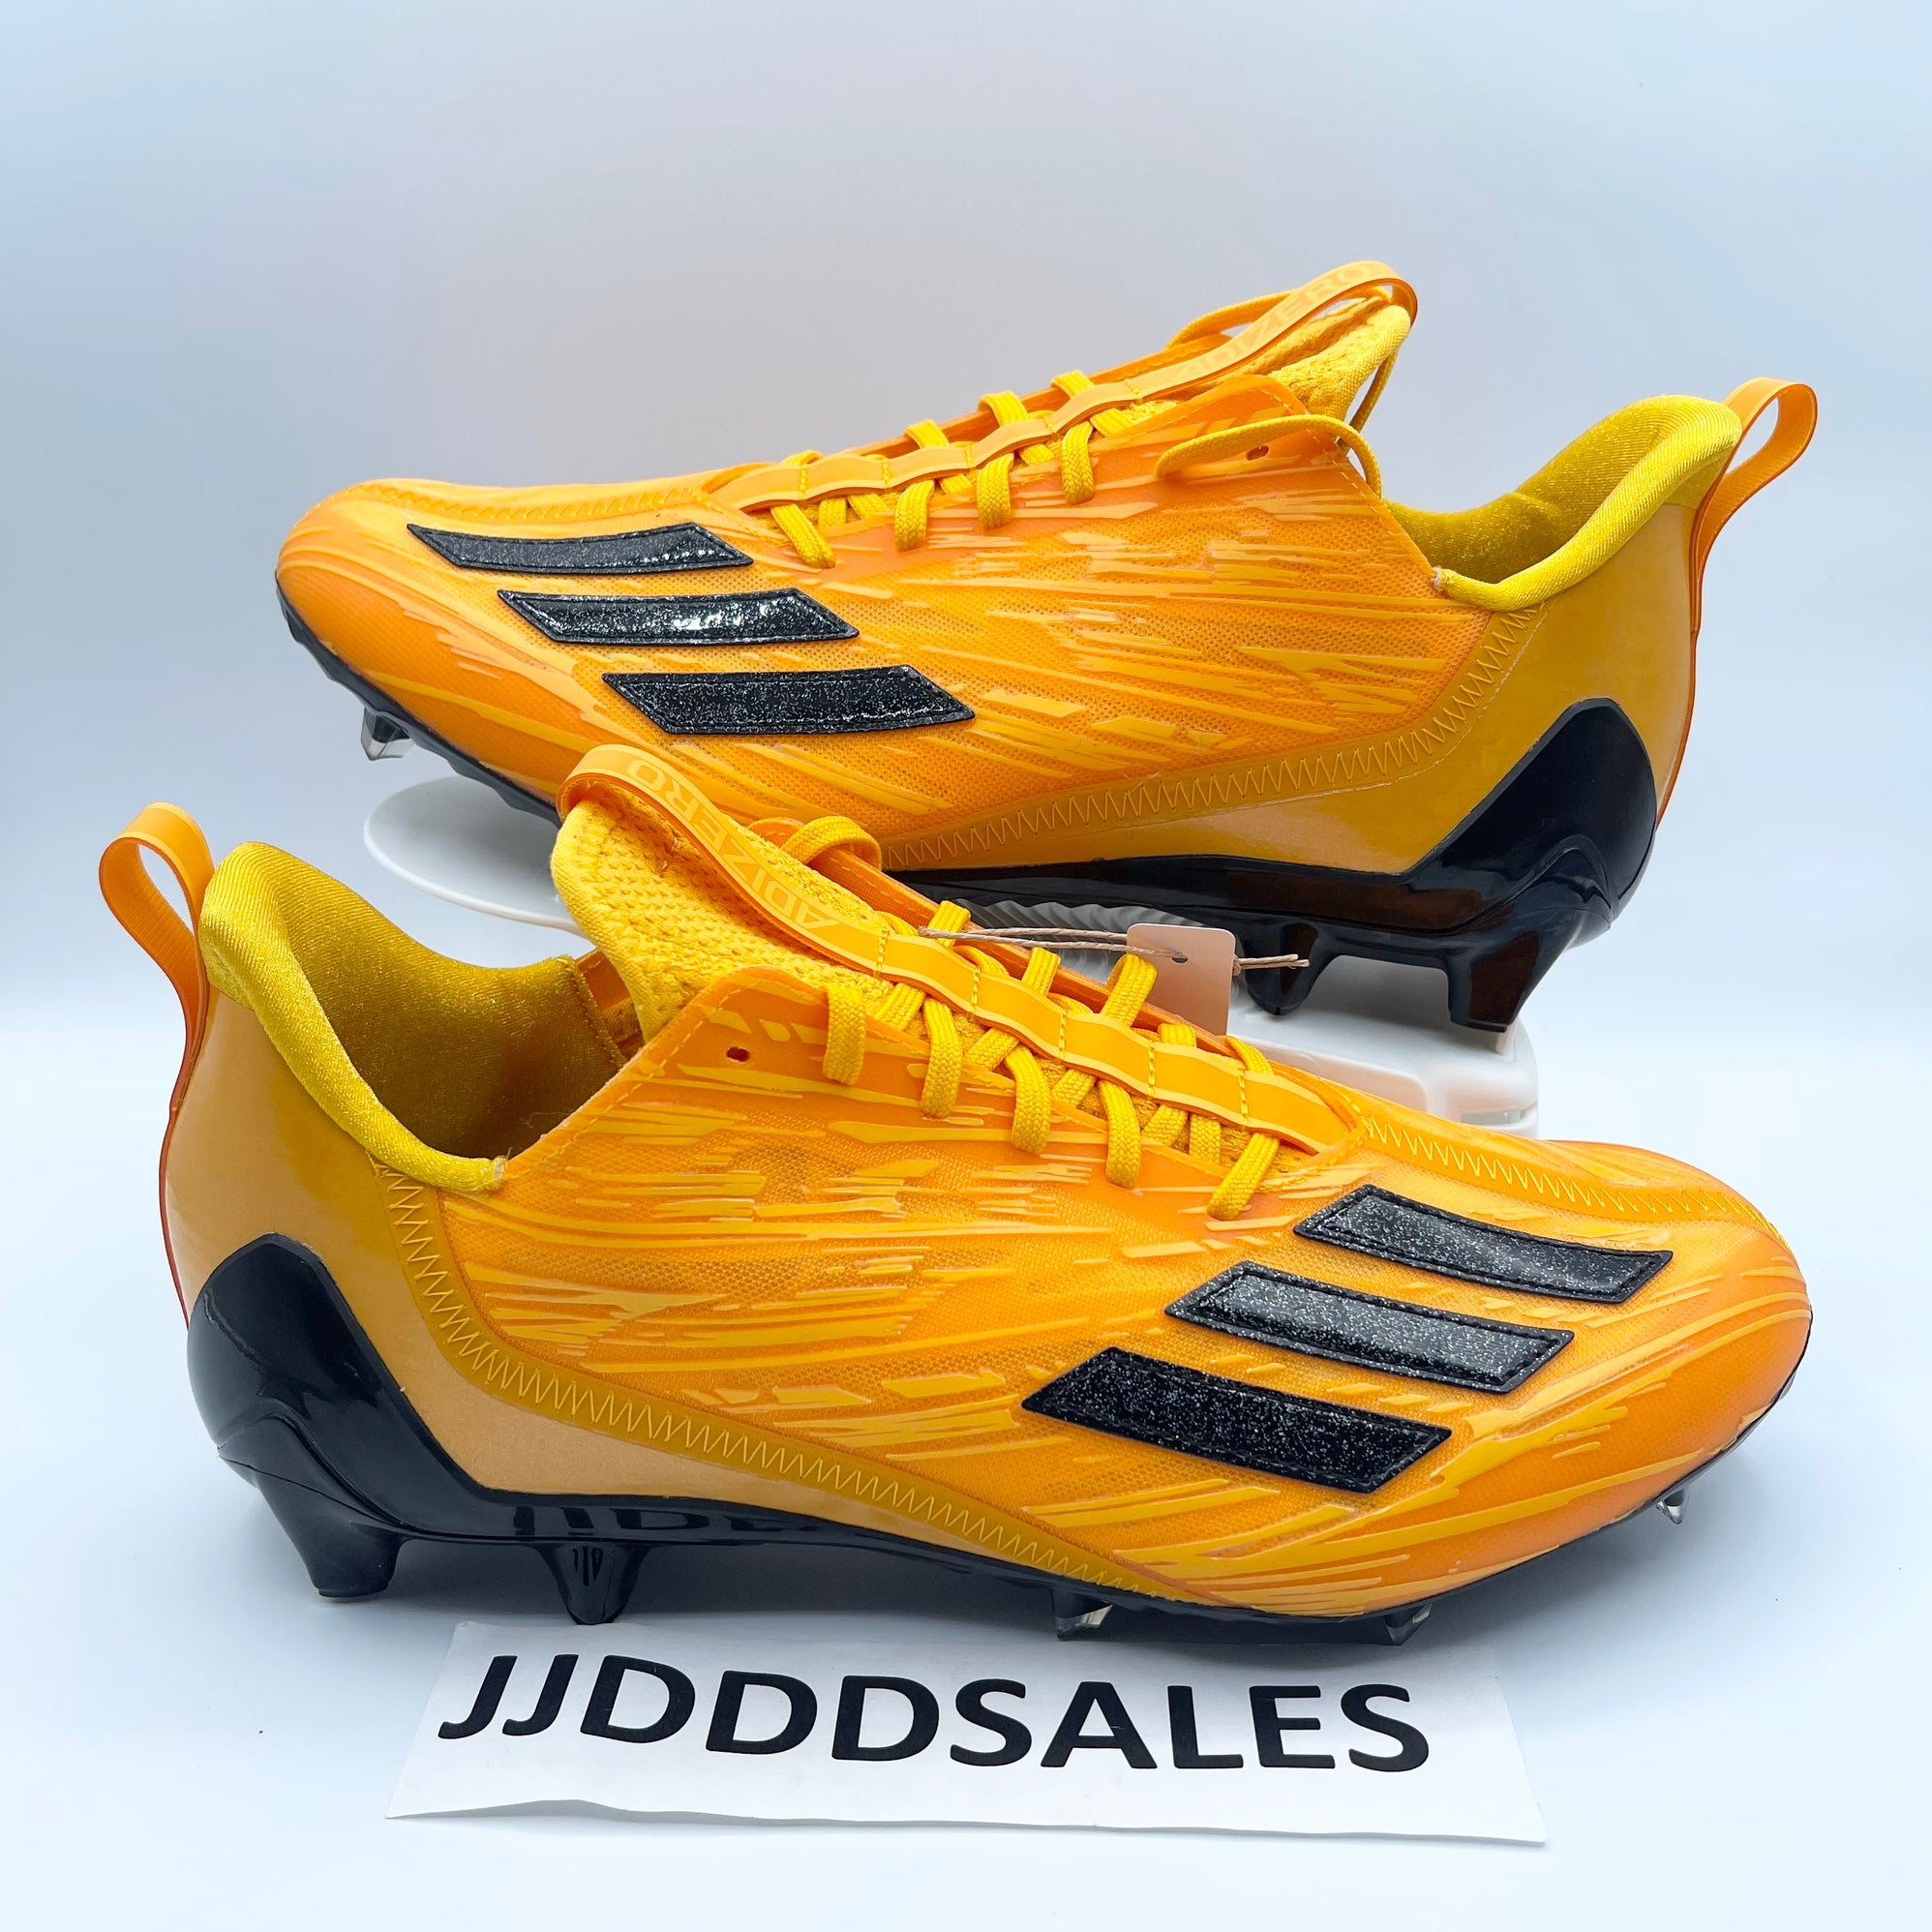 Adidas adizero Hockey Shoes - Blue/Yellow